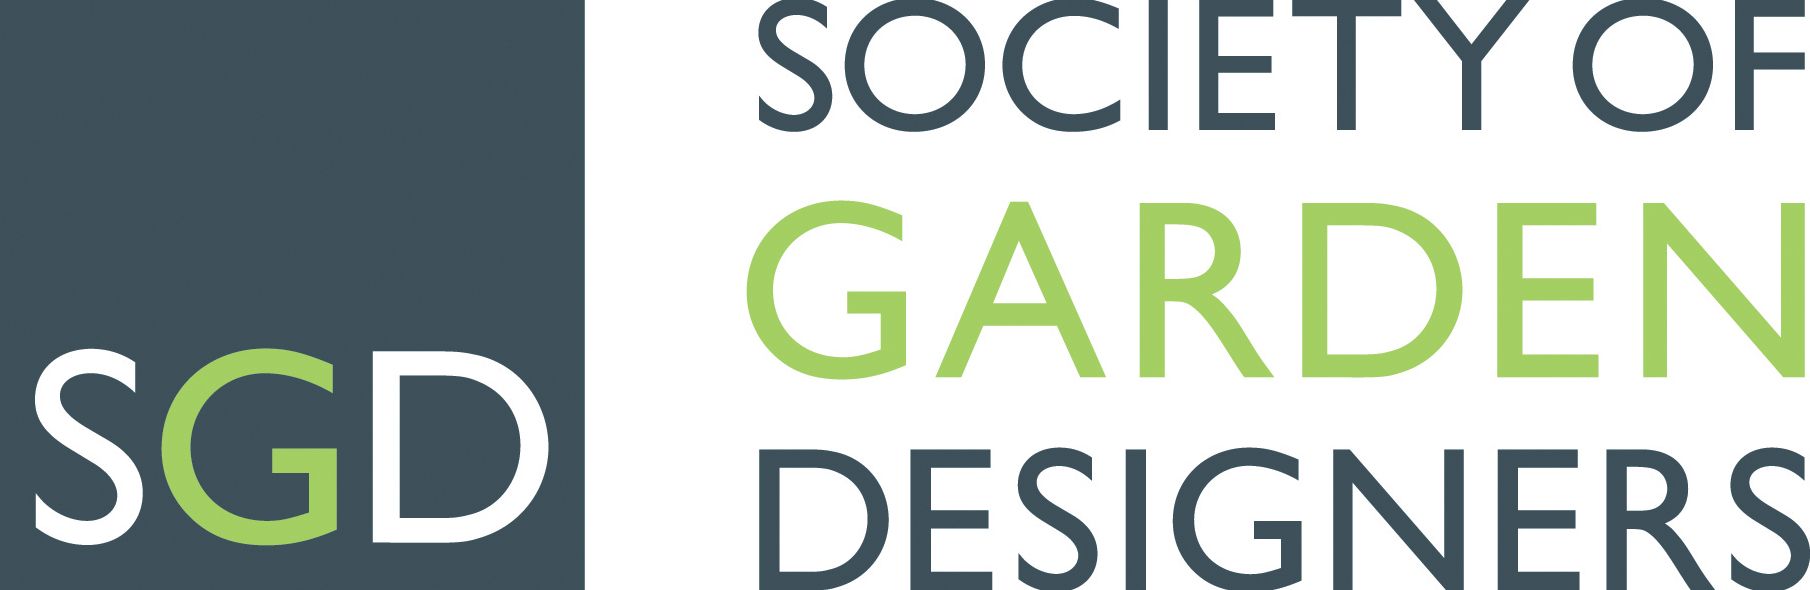 SGD - Society of Garden Designers